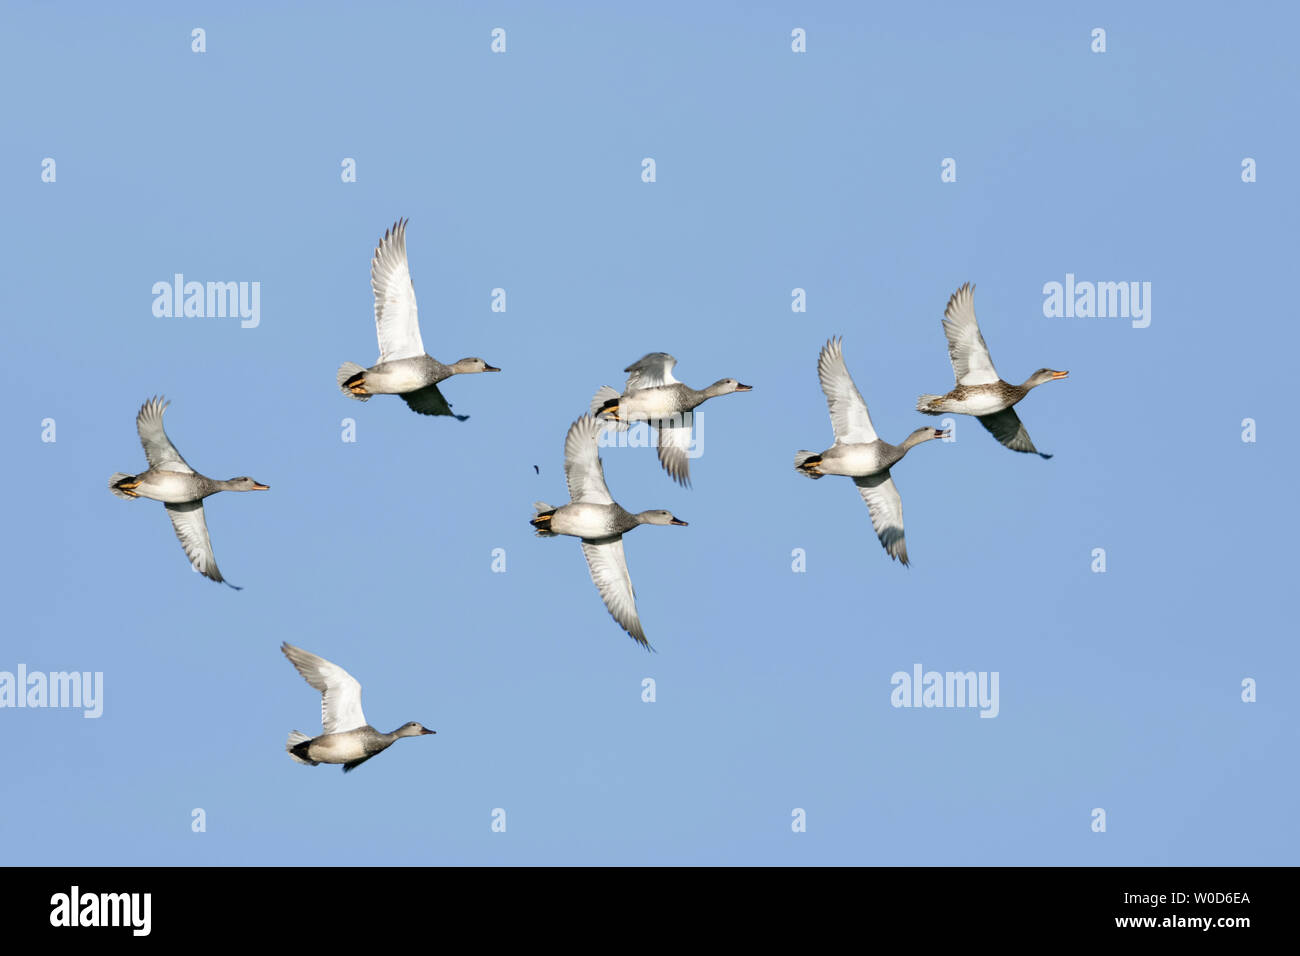 Patos Gadwall / Schnatterenten ( Anas strepera ), rebaño en vuelo típico, llamando, cielo azul, la vida silvestre, de Europa. Foto de stock